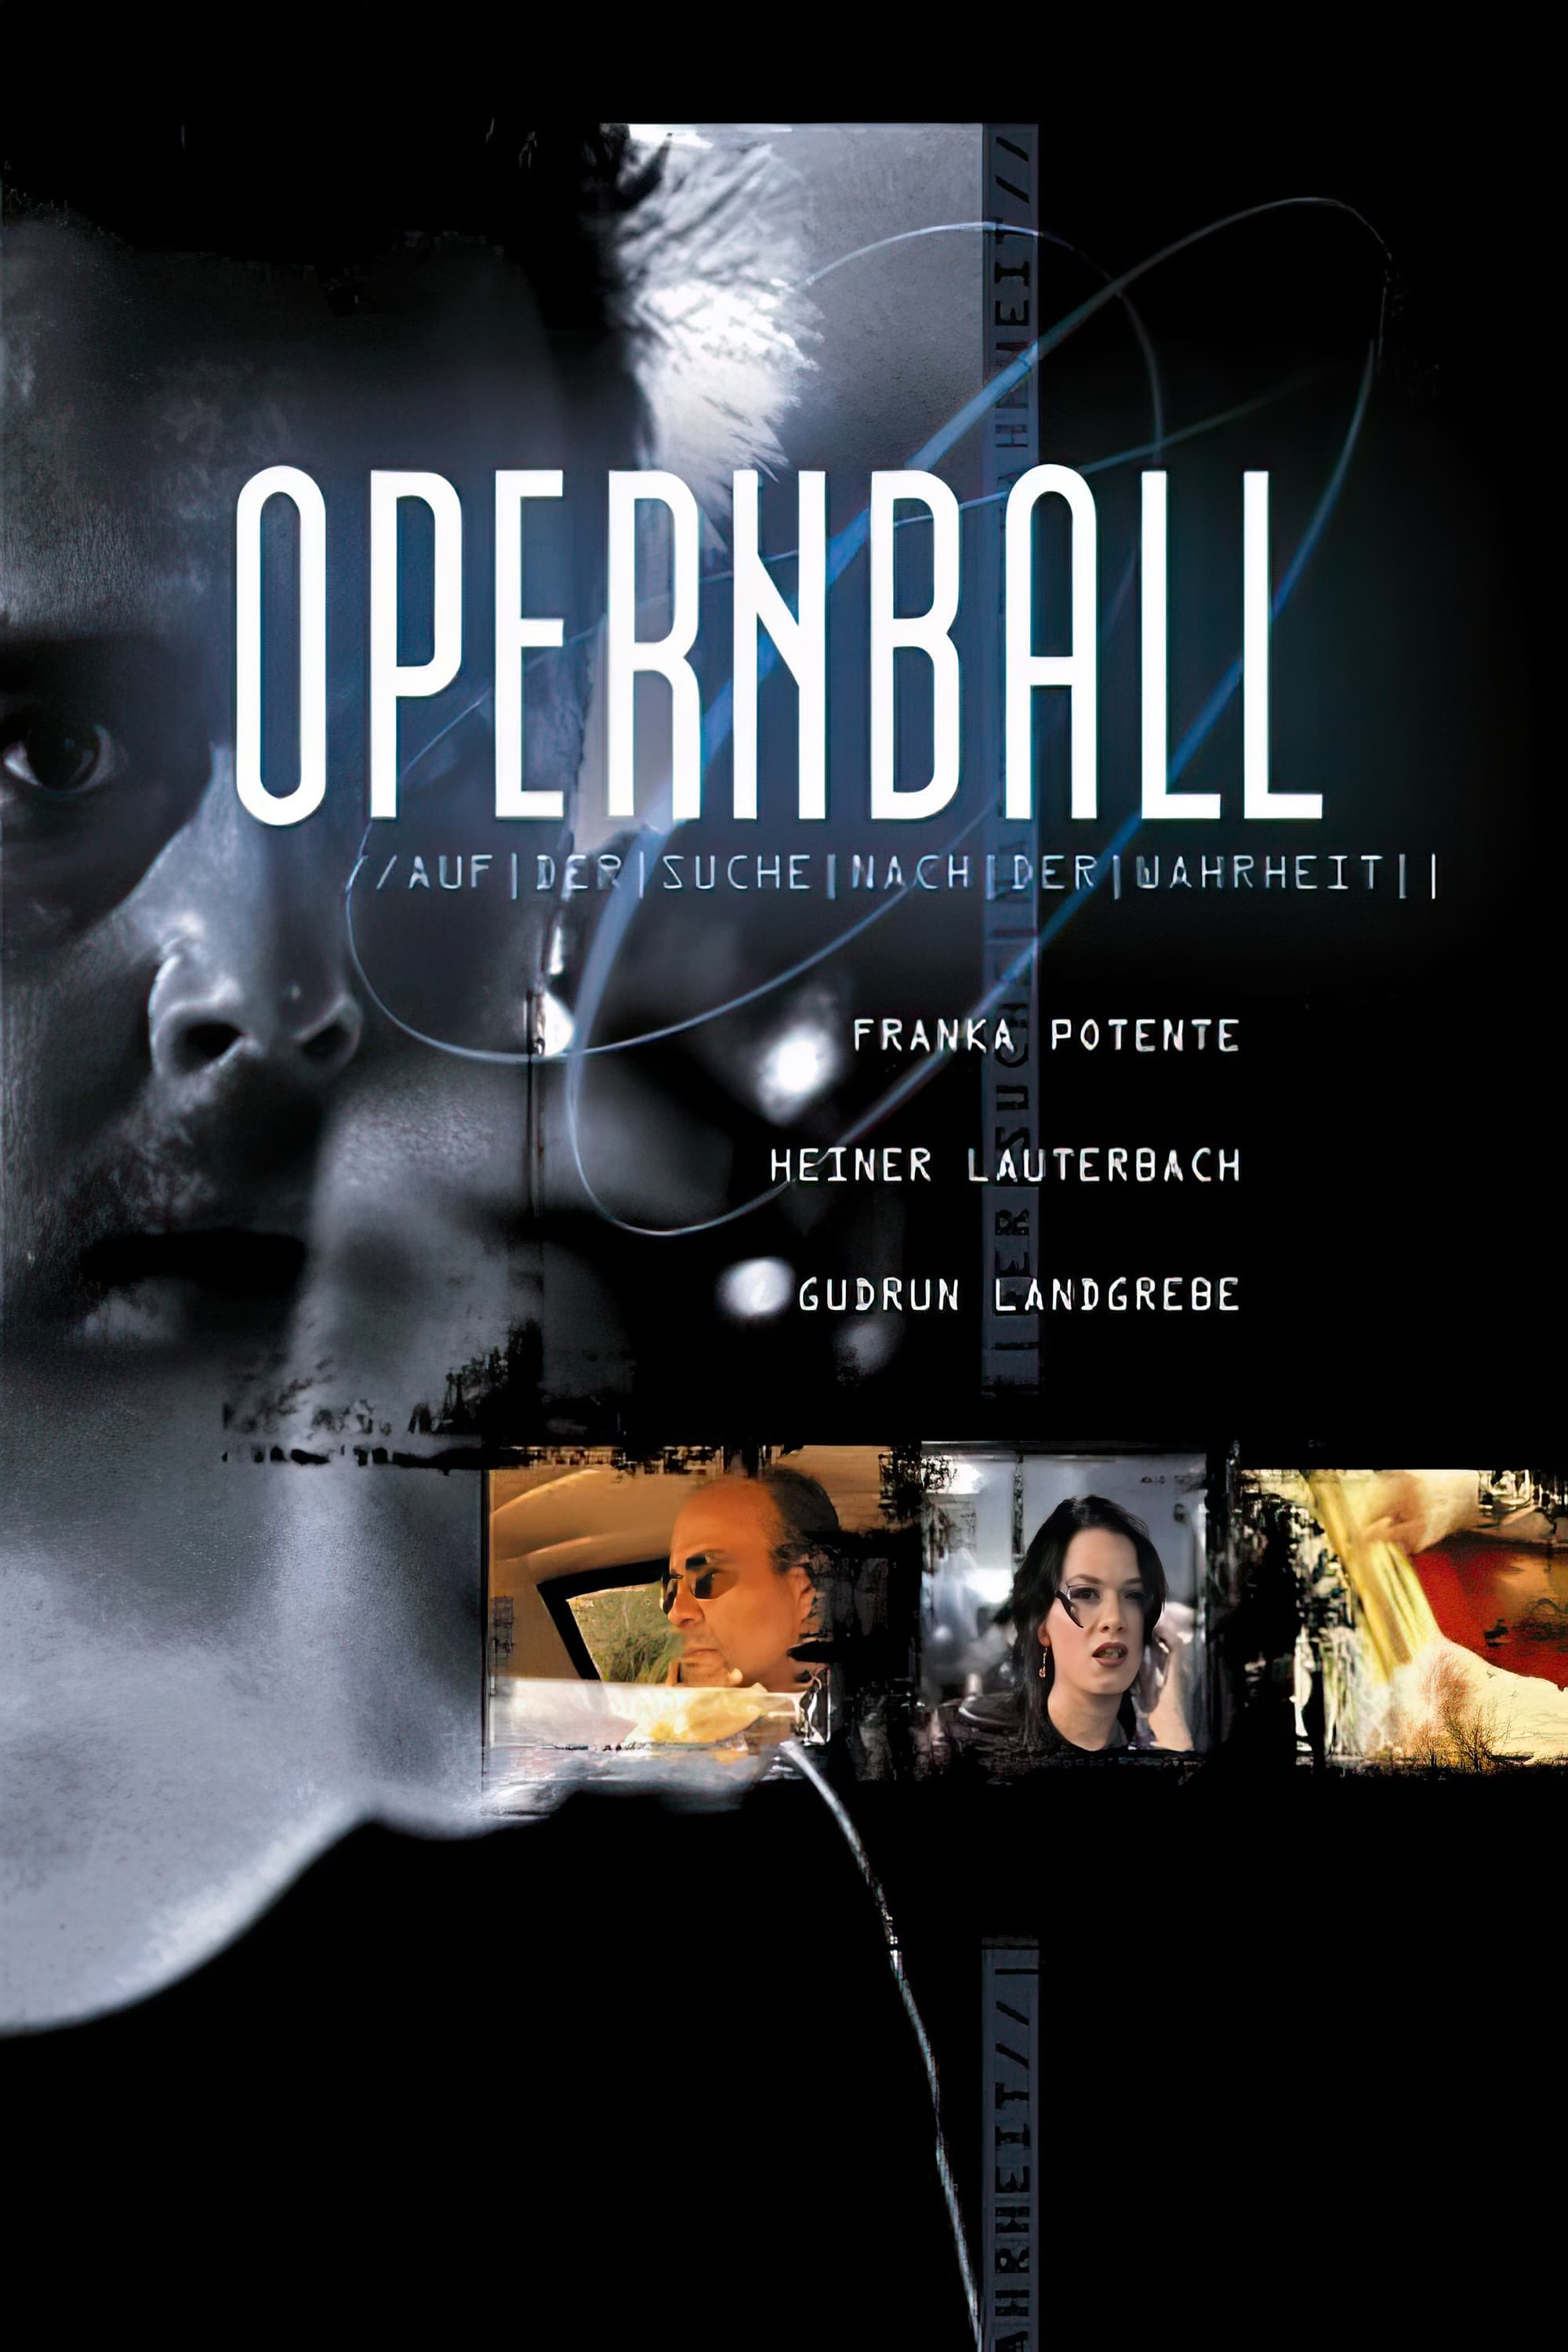 Opernball (1998)